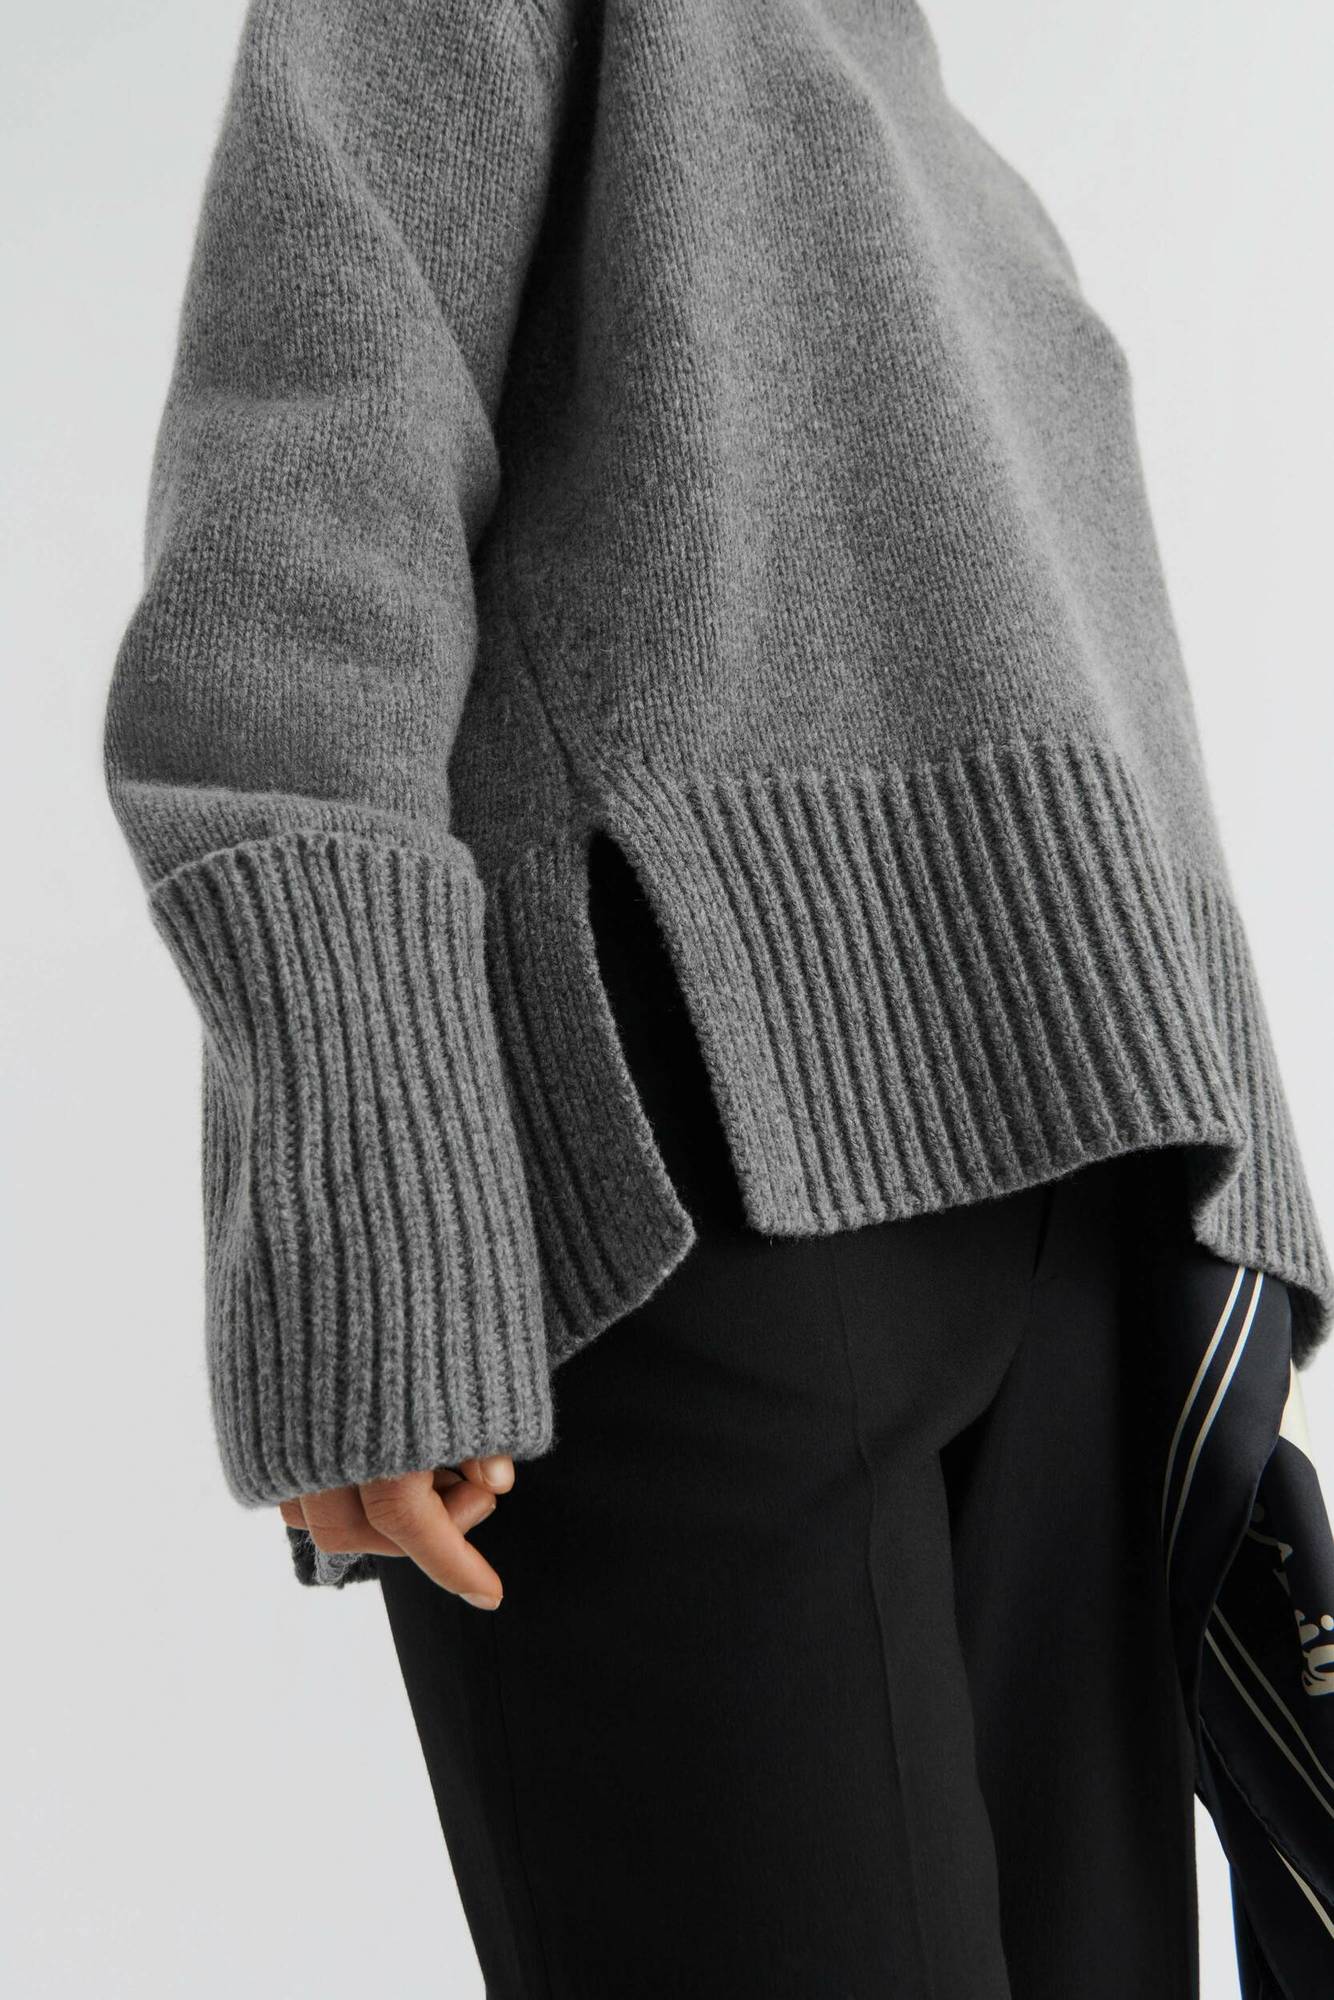 Remain Turtleneck Sweater